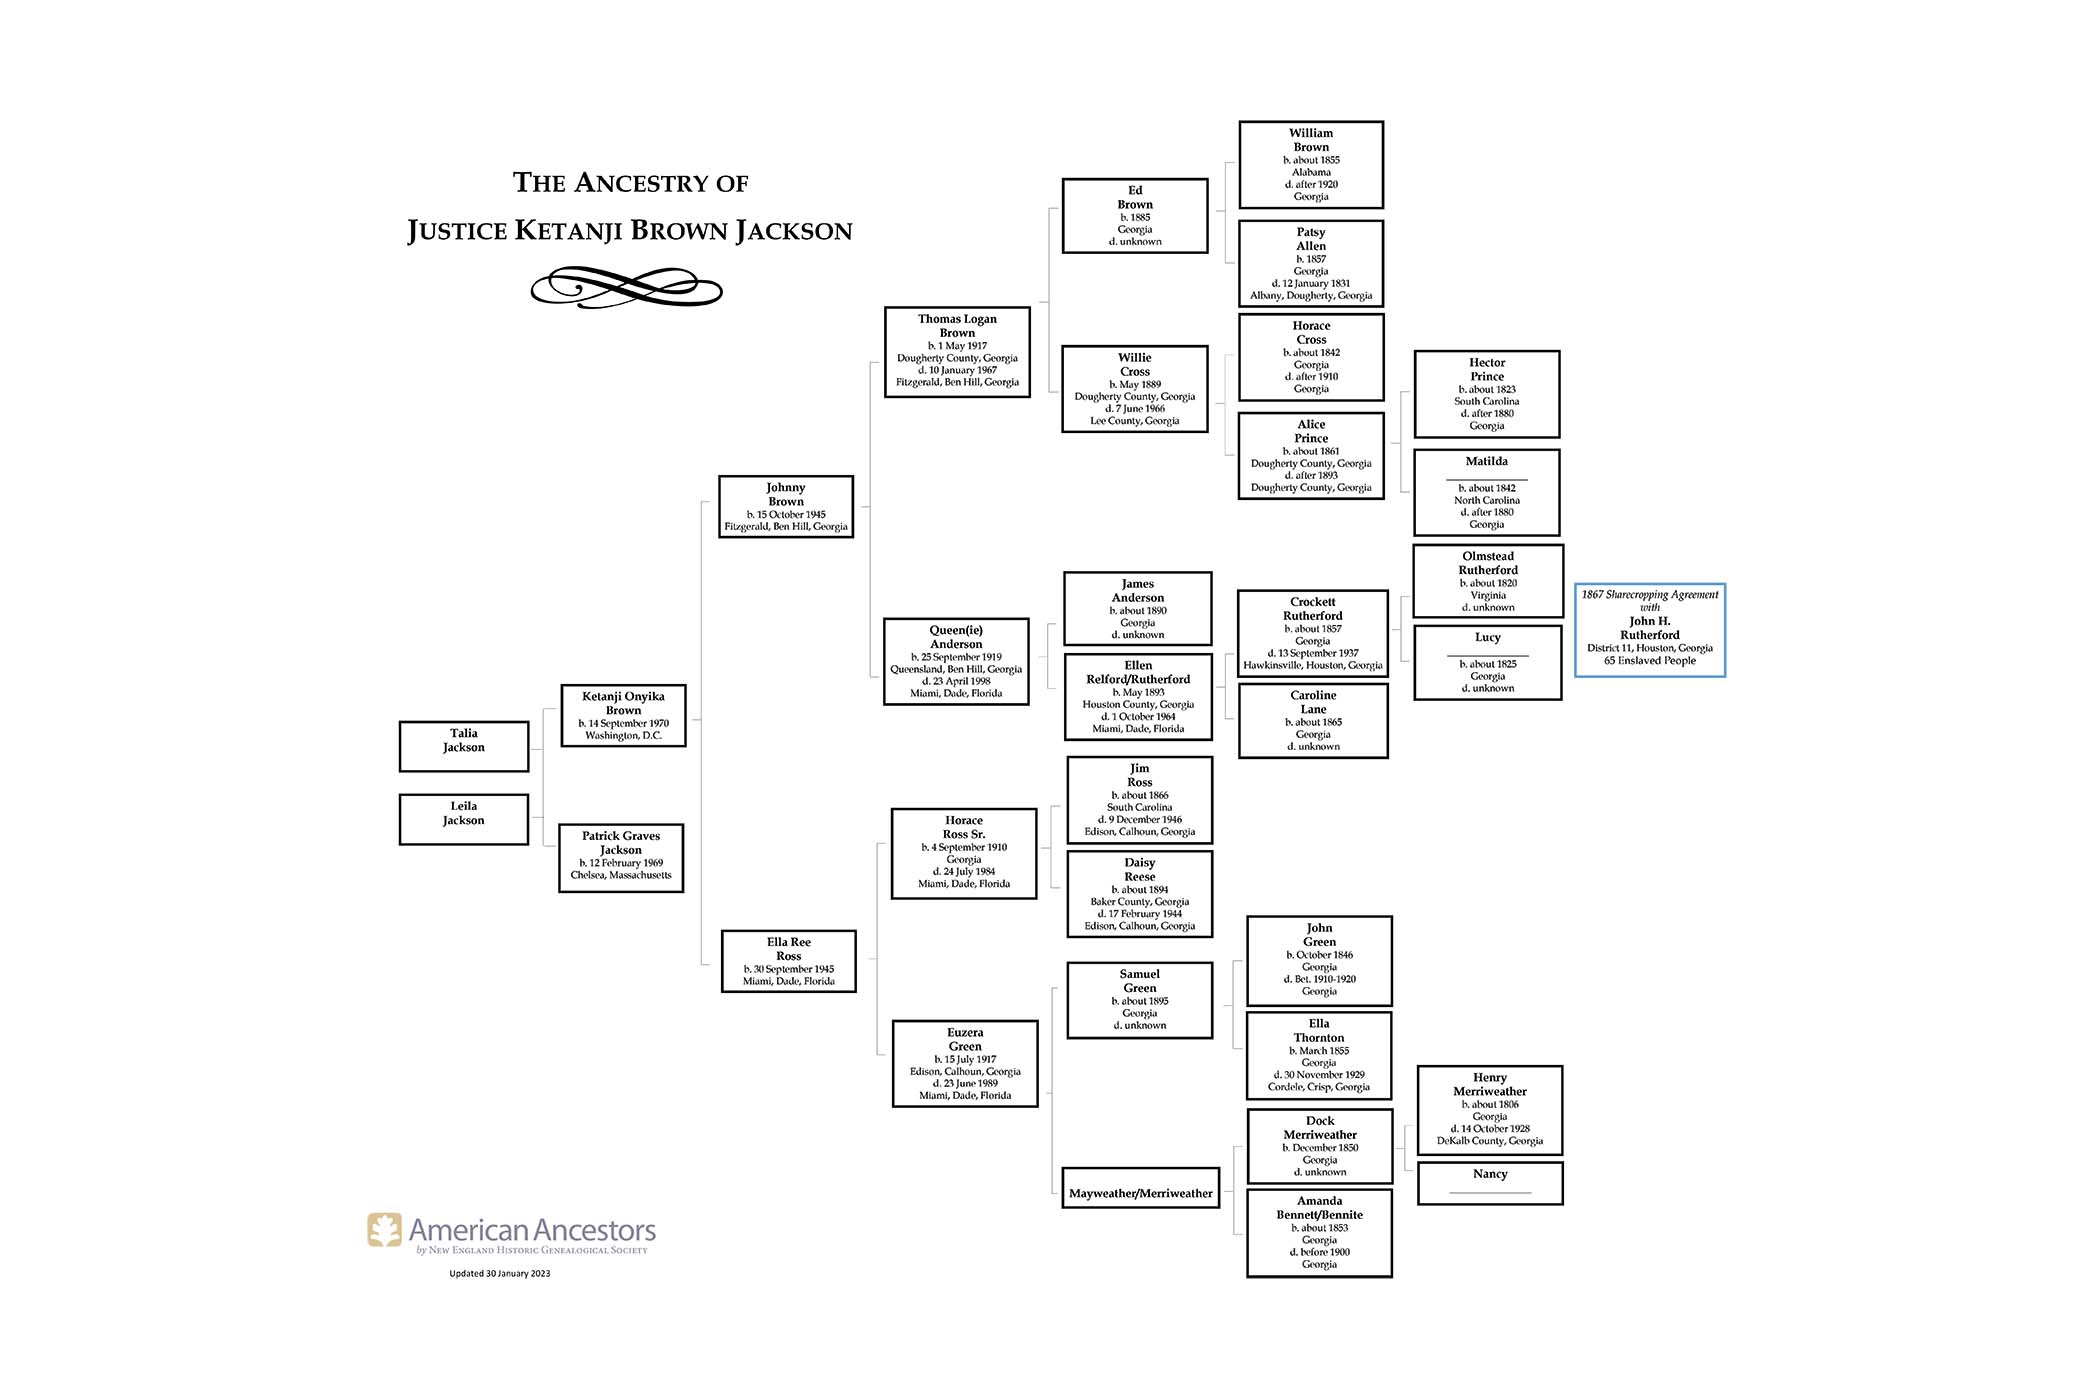 Chart showing ancestry of Ketanji Brown Jackson